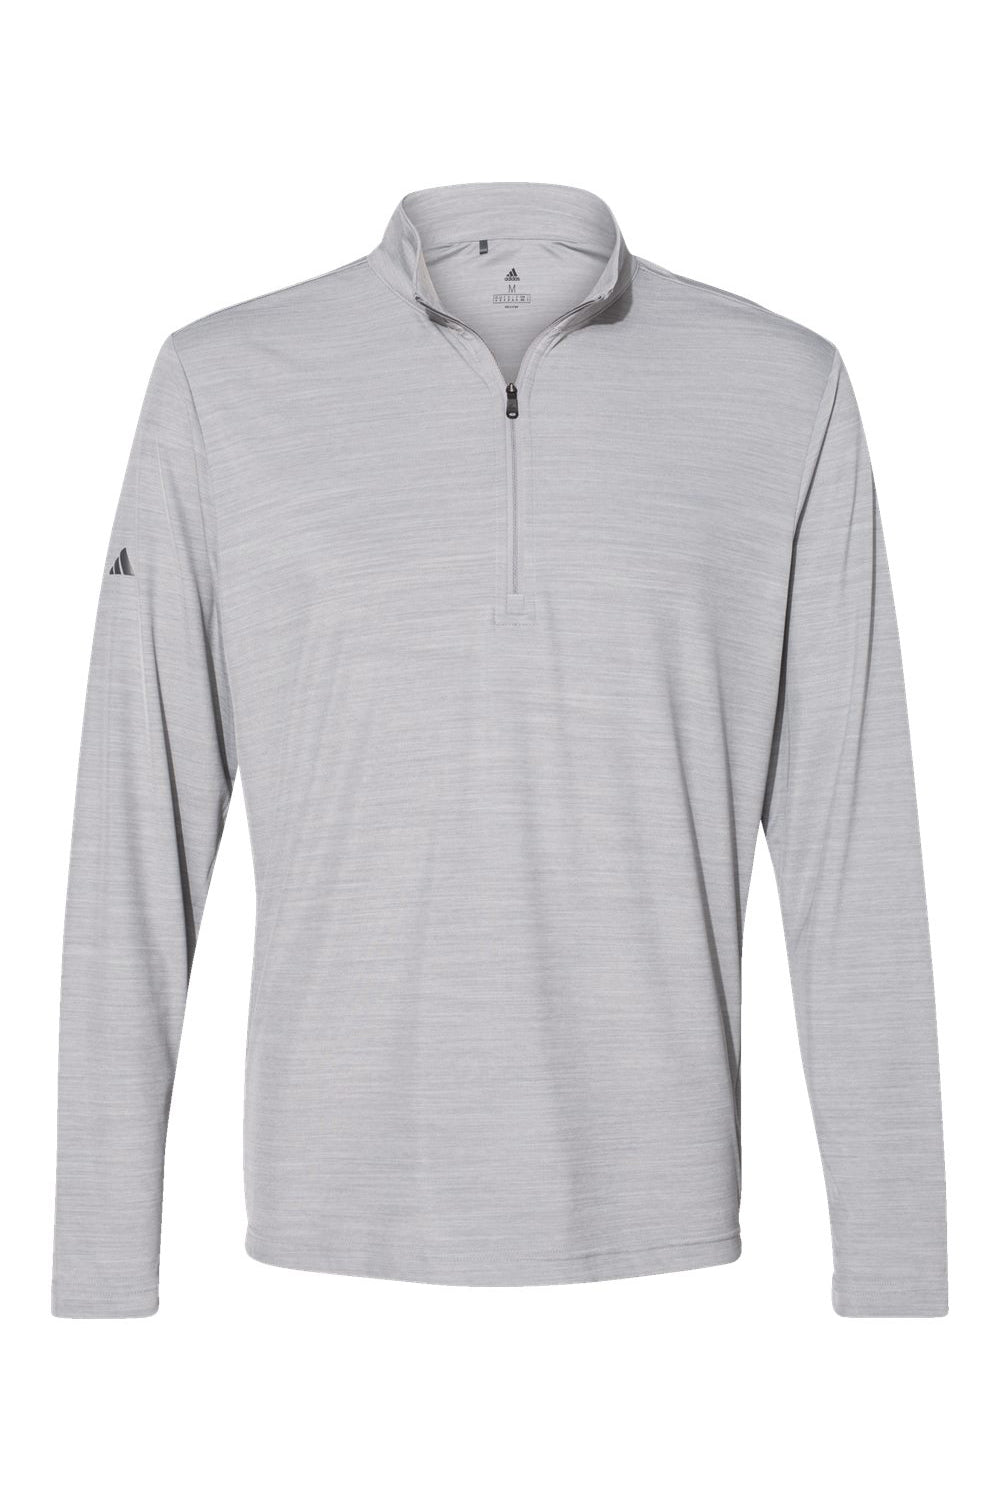 Adidas A475 Mens Moisture Wicking 1/4 Zip Sweatshirt Mid Grey Melange Flat Front